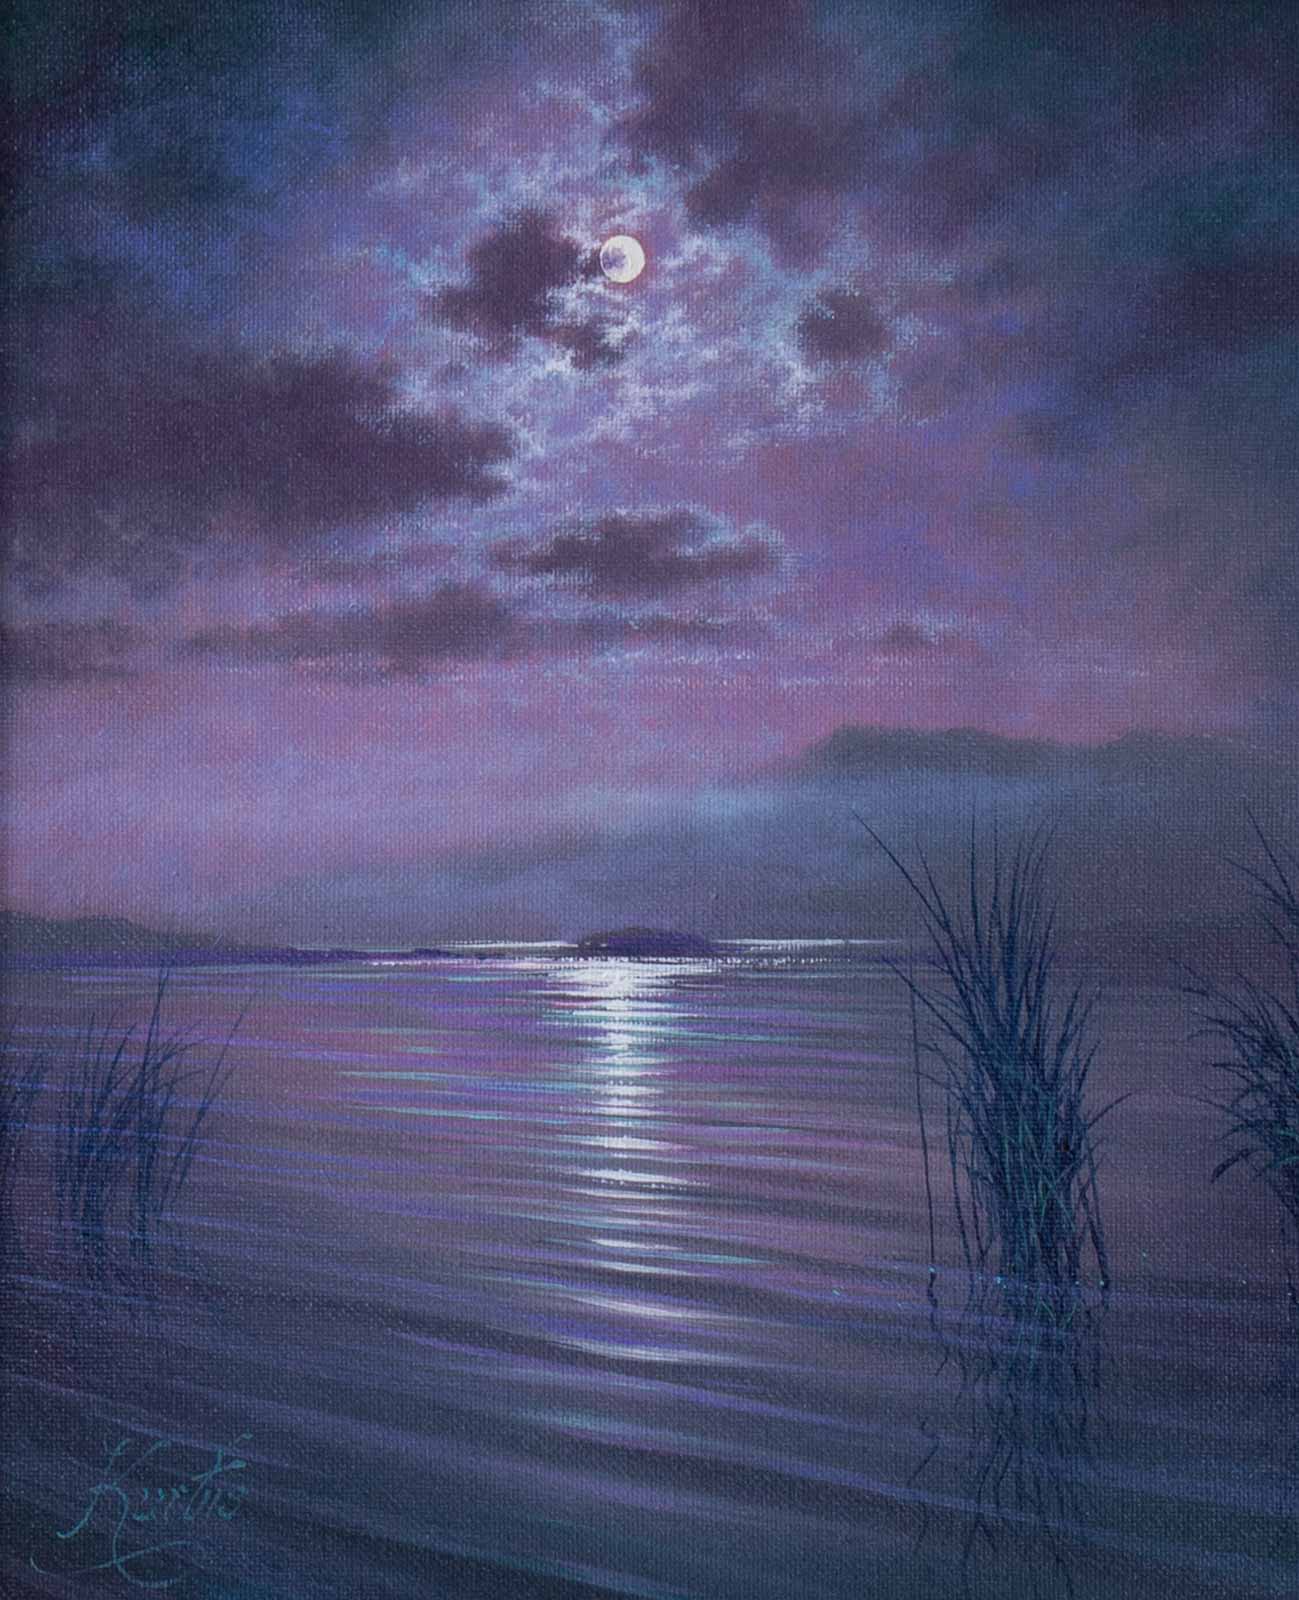 Moonlight Reflections